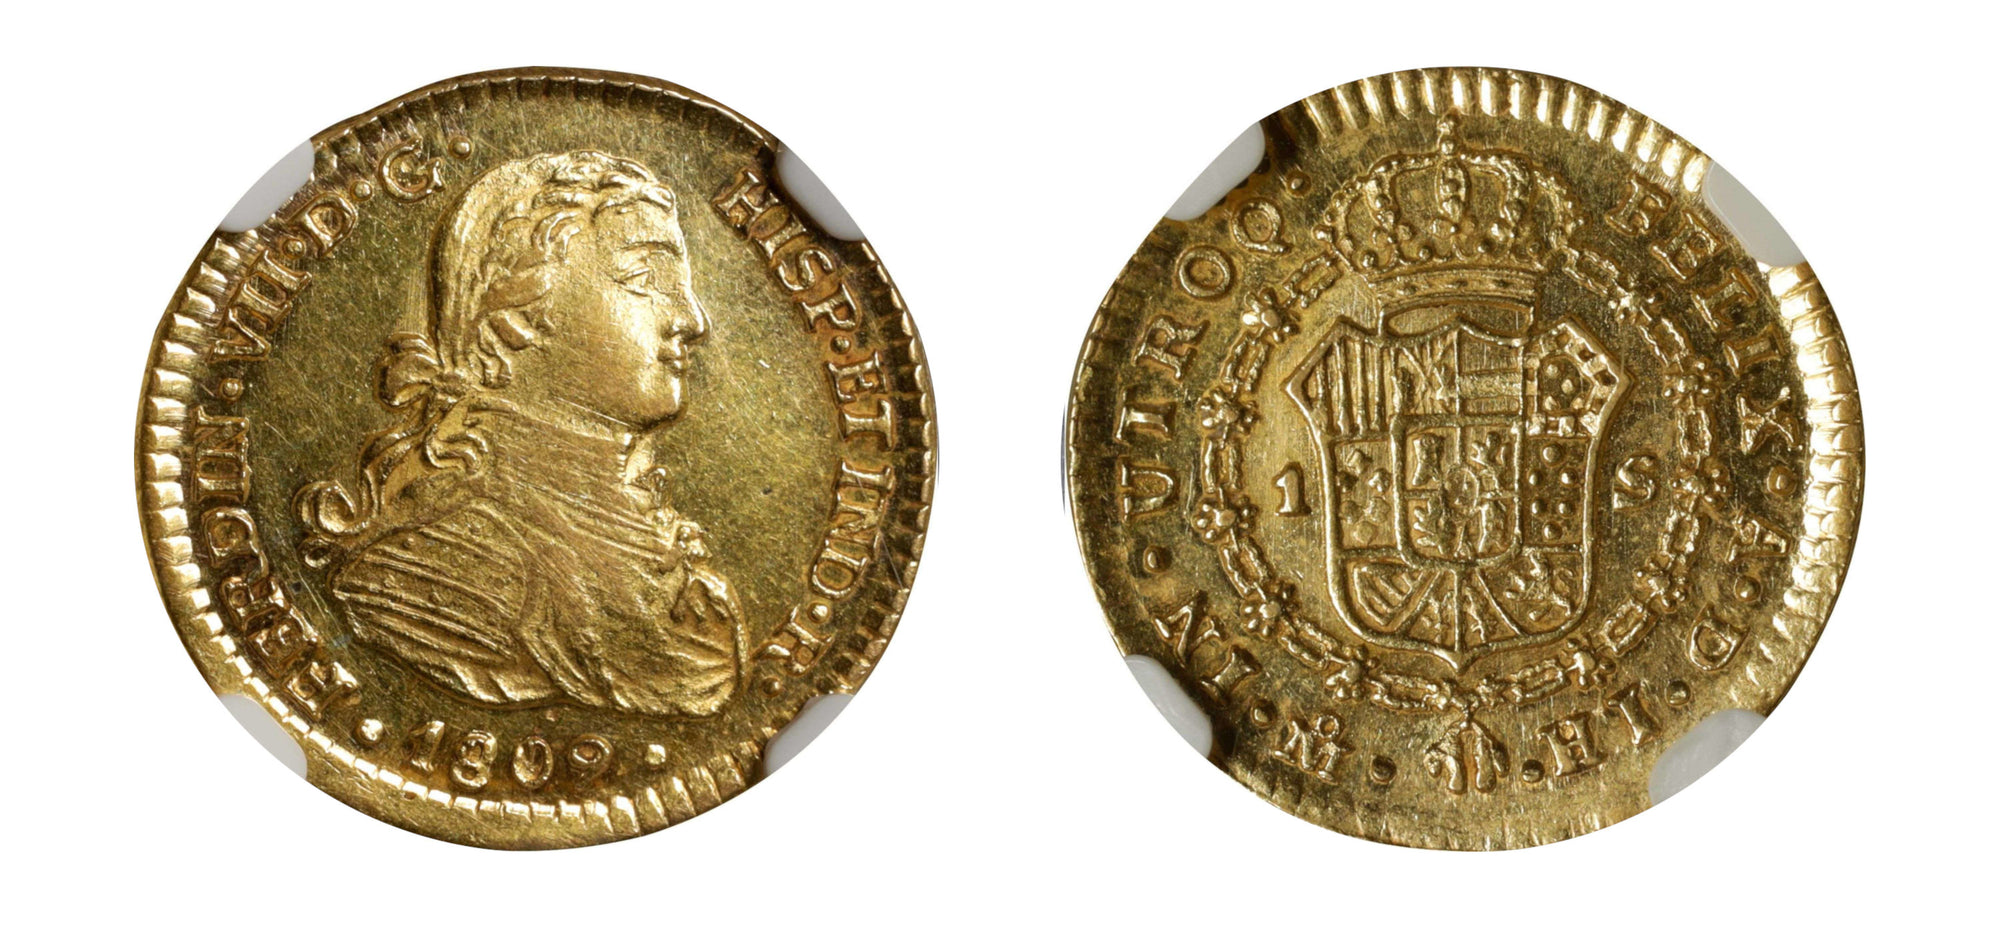 1809 Gold Escudo NGC MS 62 - Hard Asset Management, Inc